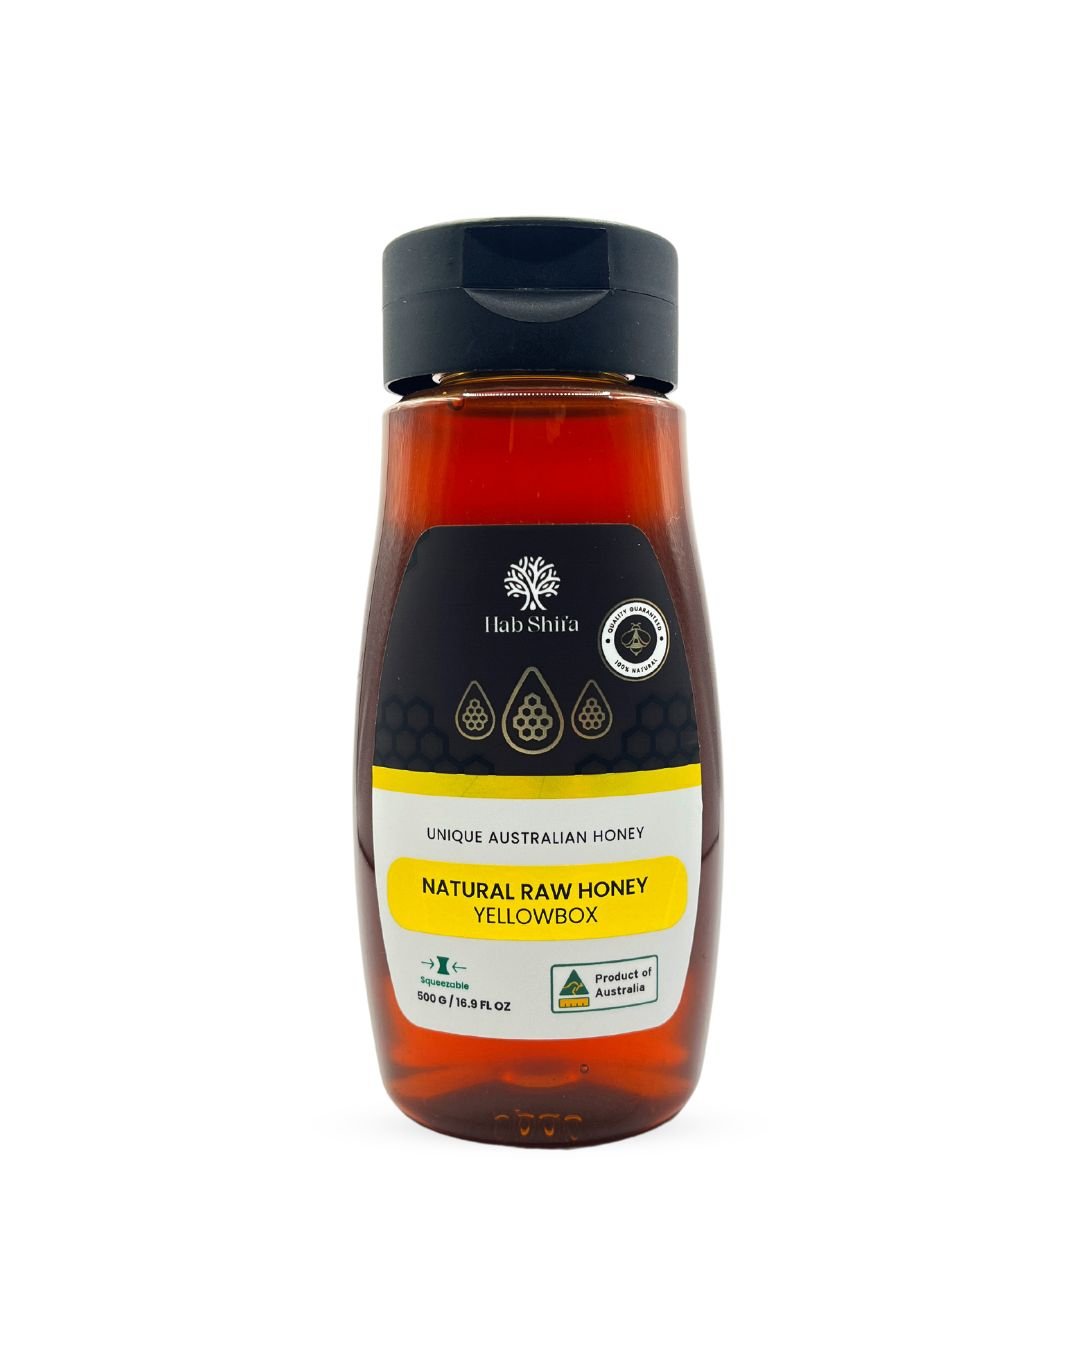 Natural Raw Honey - Yellowbox 500g - Hab Shifa